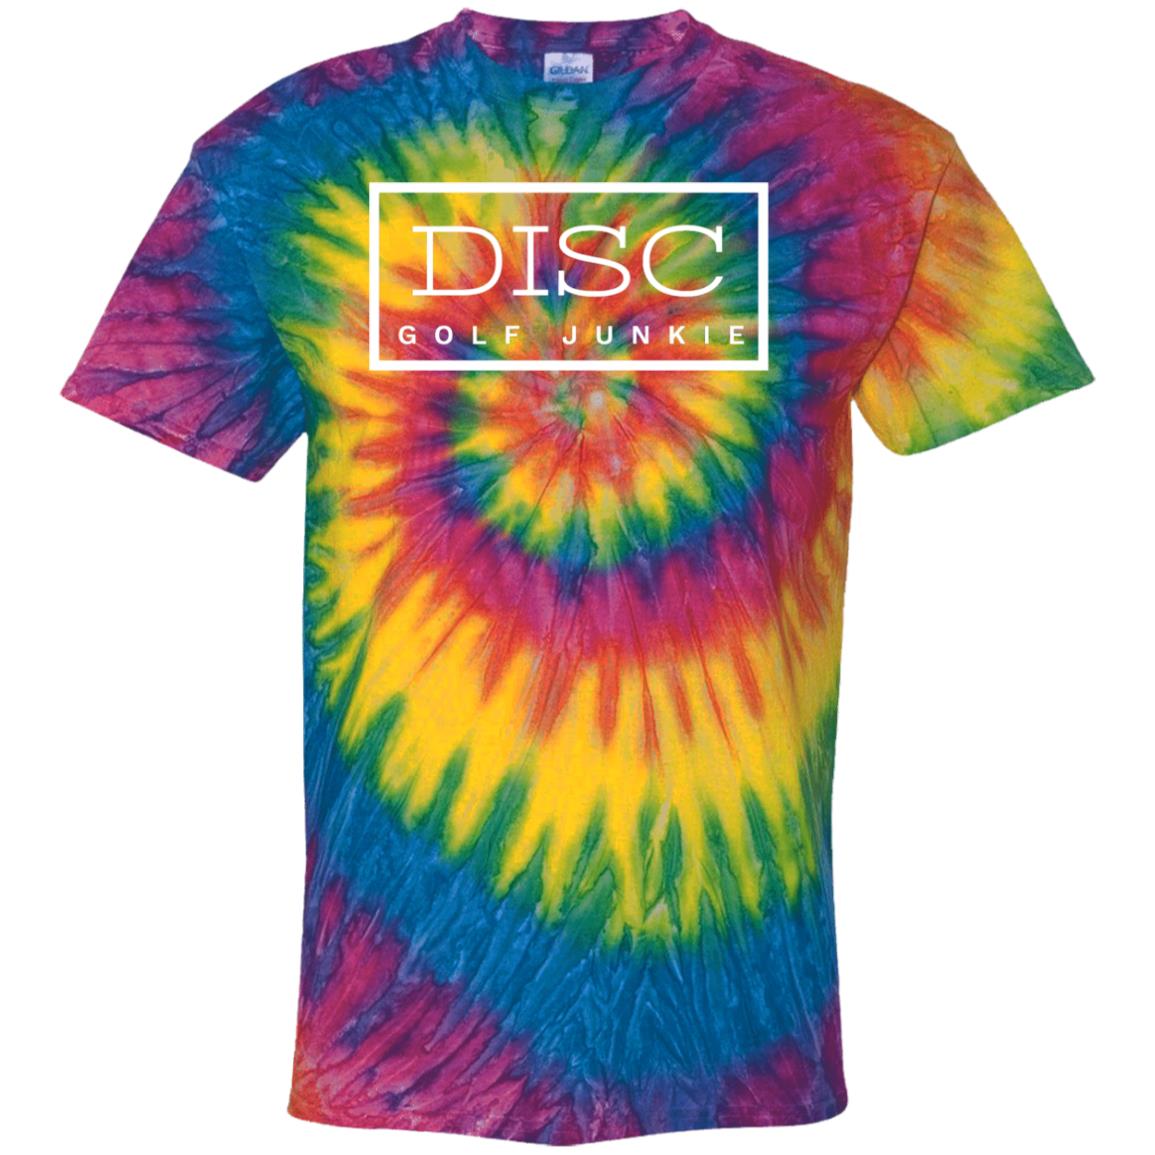 Rainbow "Disc Golf Junkie" 100% Cotton Tie Dye T-Shirt